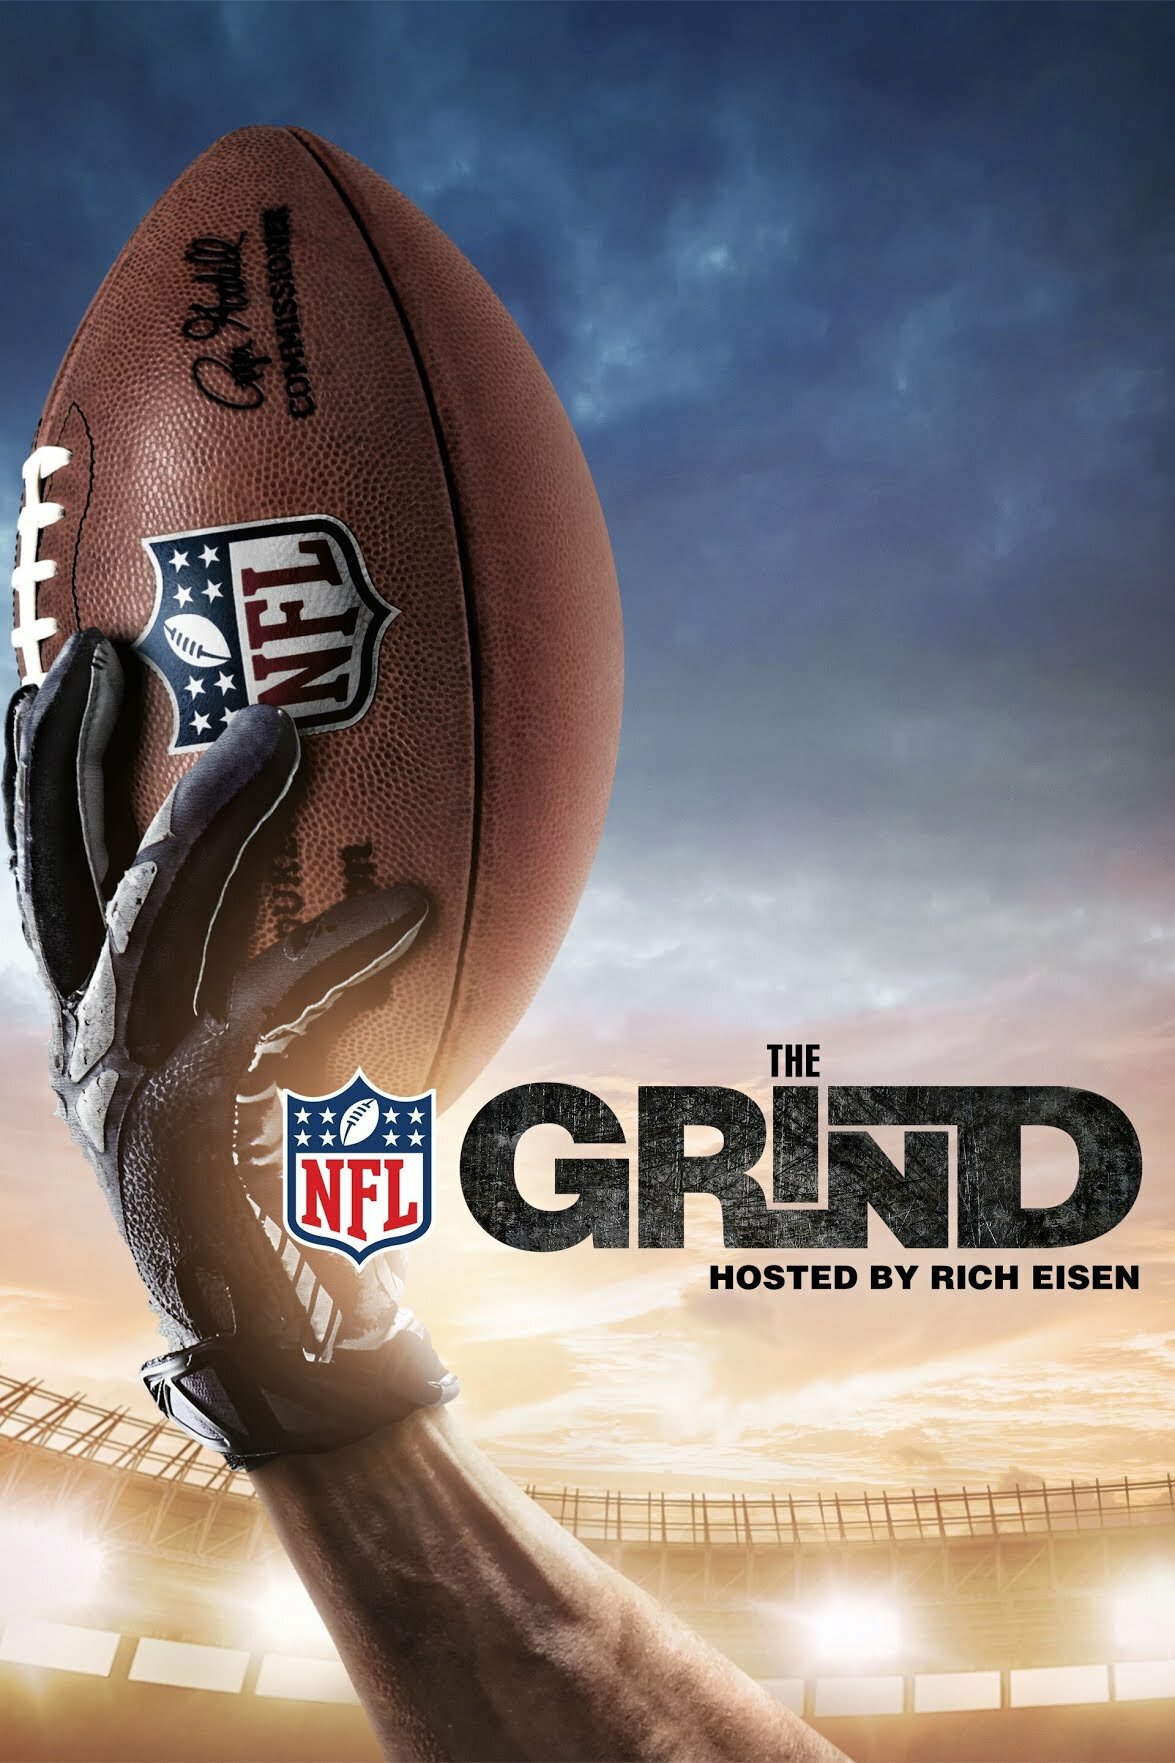 NFL: The Grind ne zaman